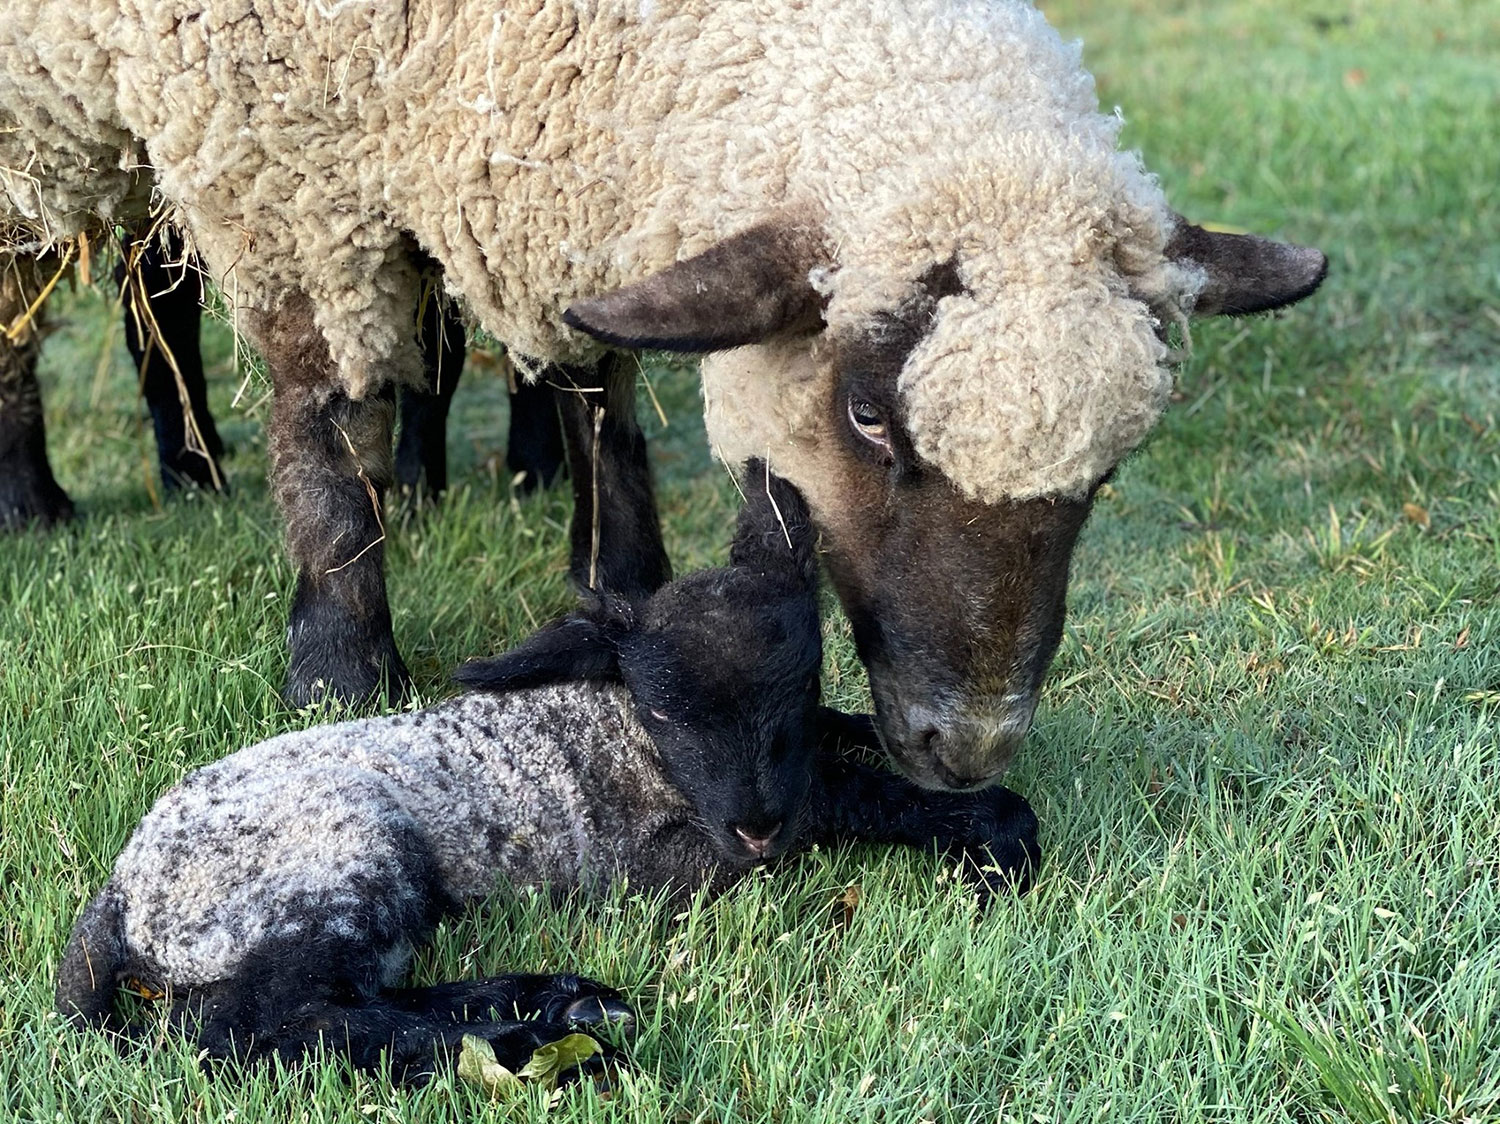 New lamb born this spring on the Farmstead // courtesy Shalley Boles